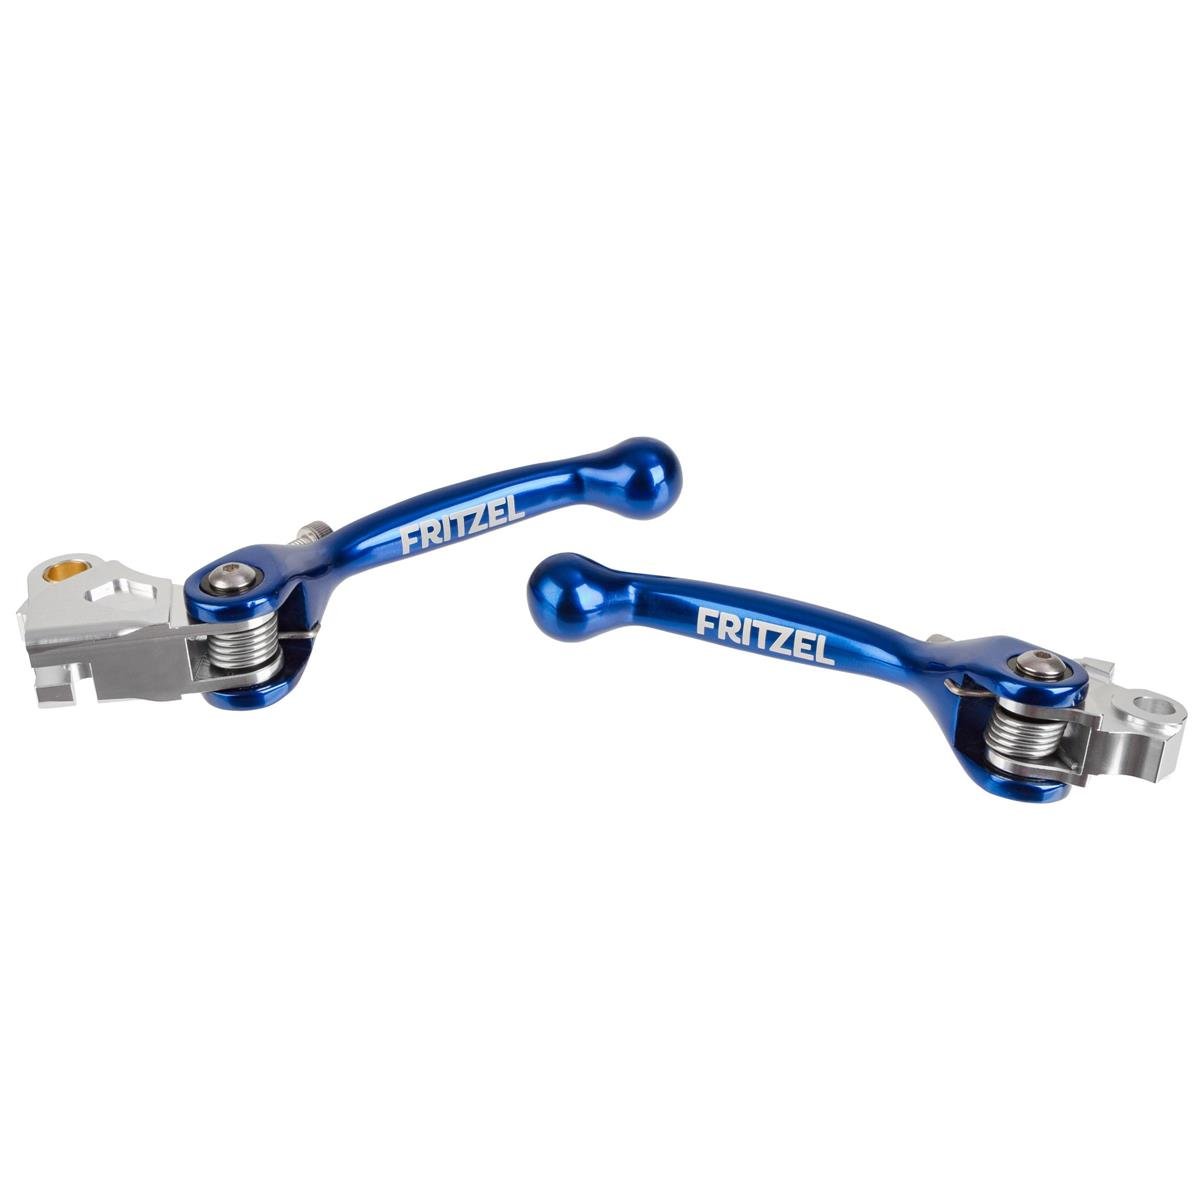 FRITZEL Brems-/Kupplungshebel-Set Renngespann Yamaha YZF 250/450 09-18, Aluminium, einstellbar, Blau